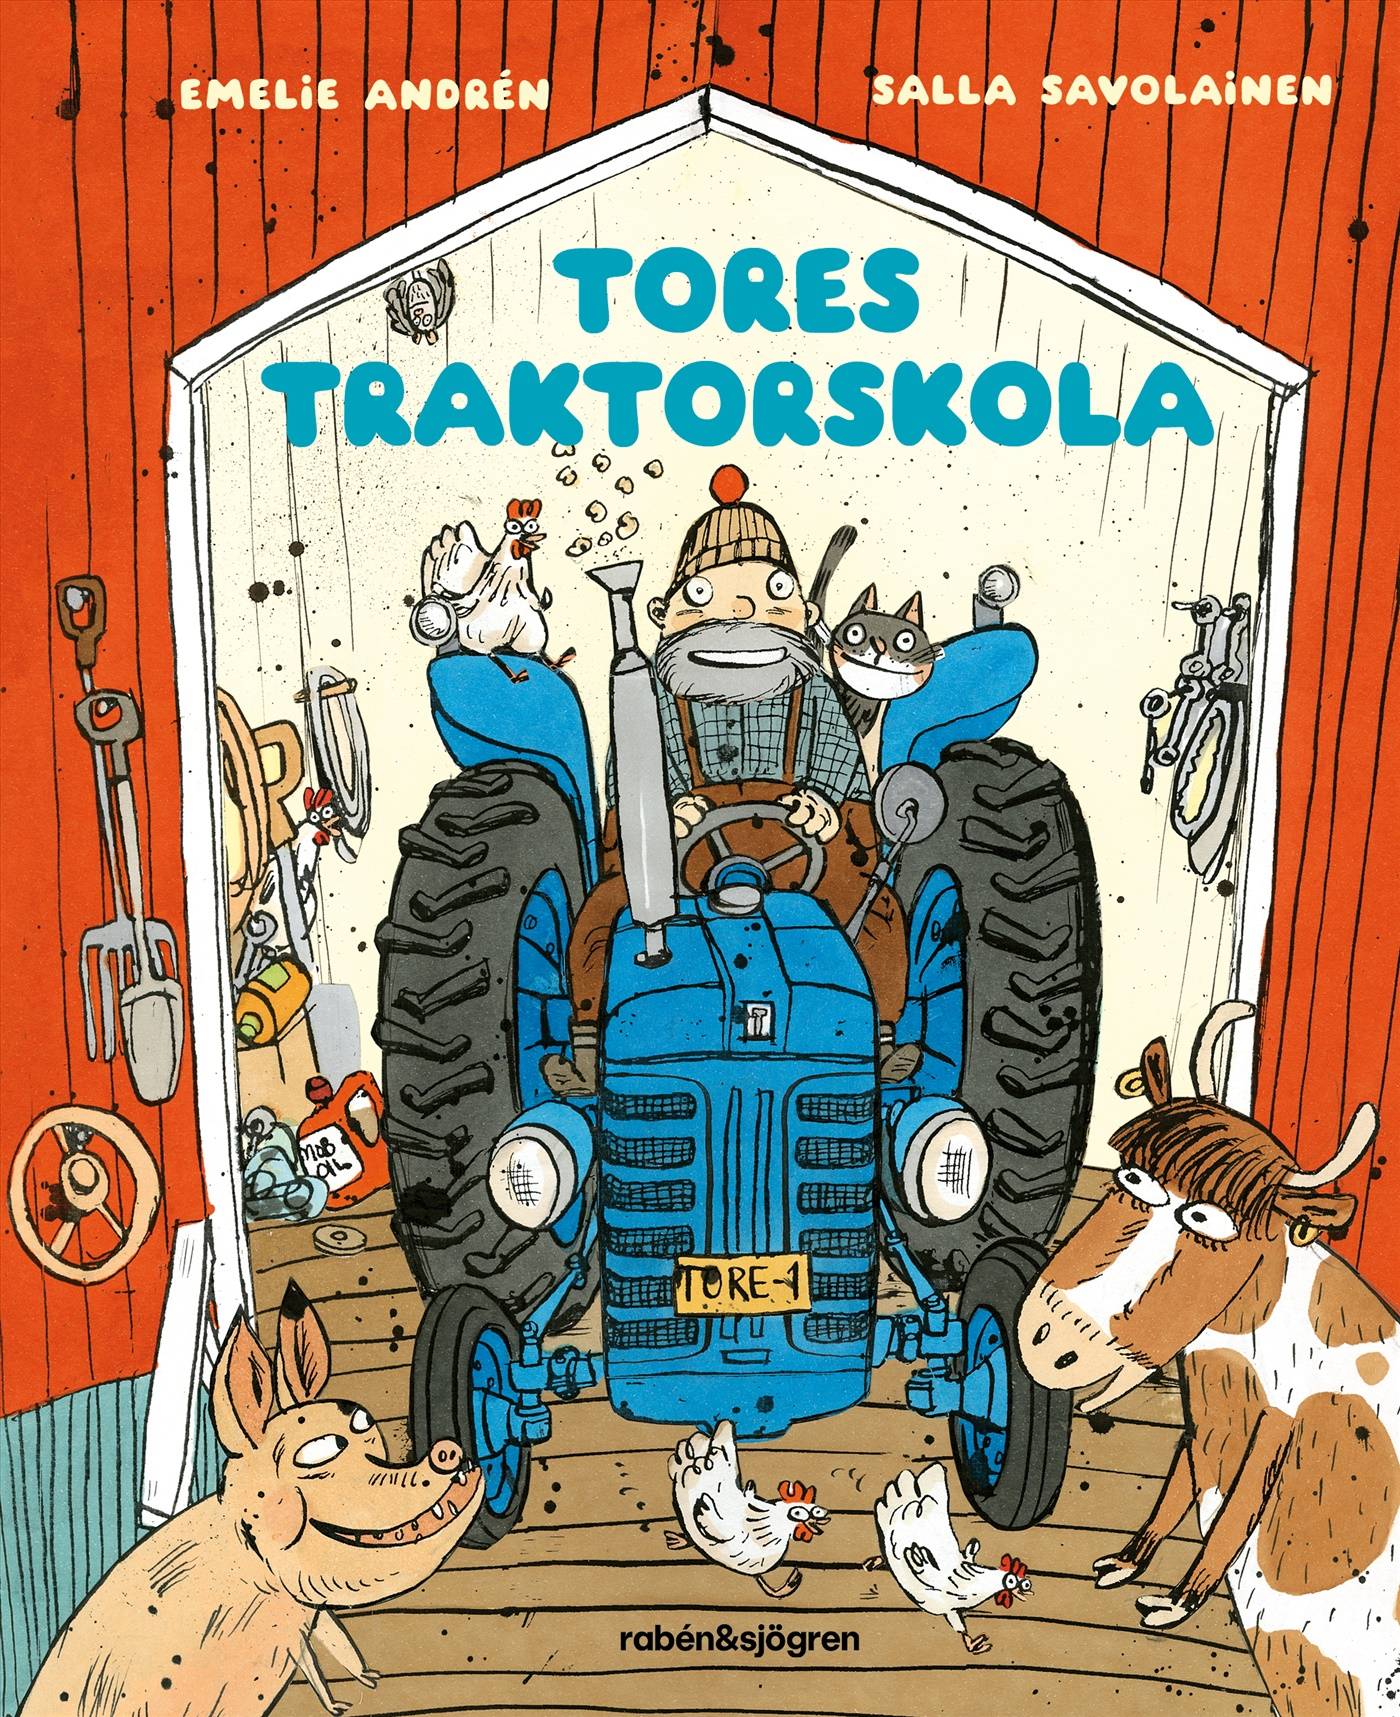 Tores traktorskola